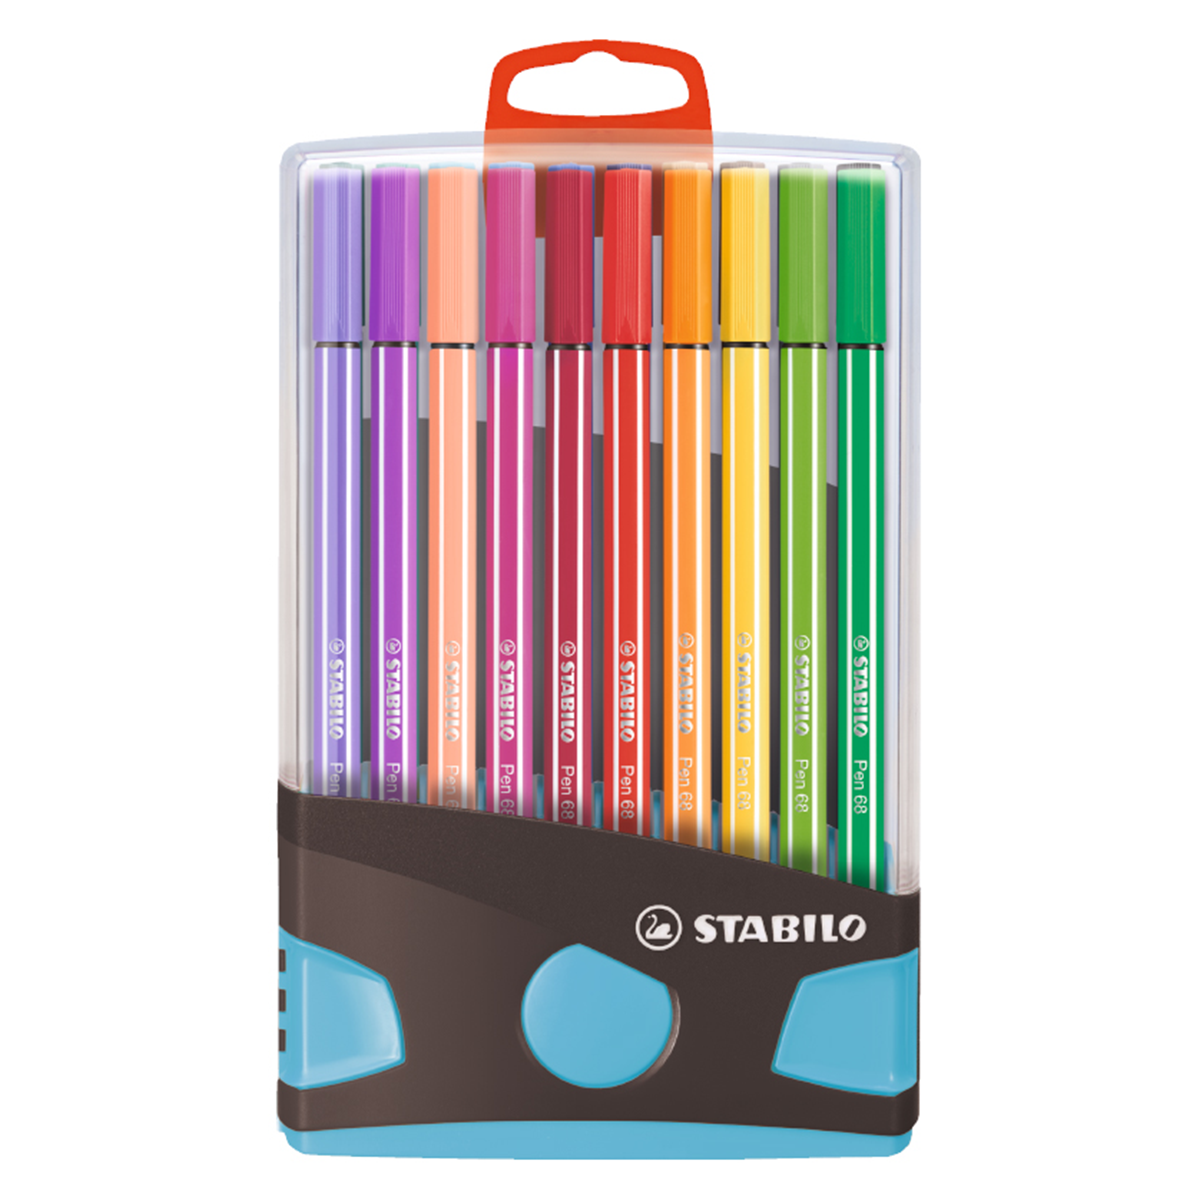 Stabilo Pen 68 Felt-tip Colorparade 20 pcs